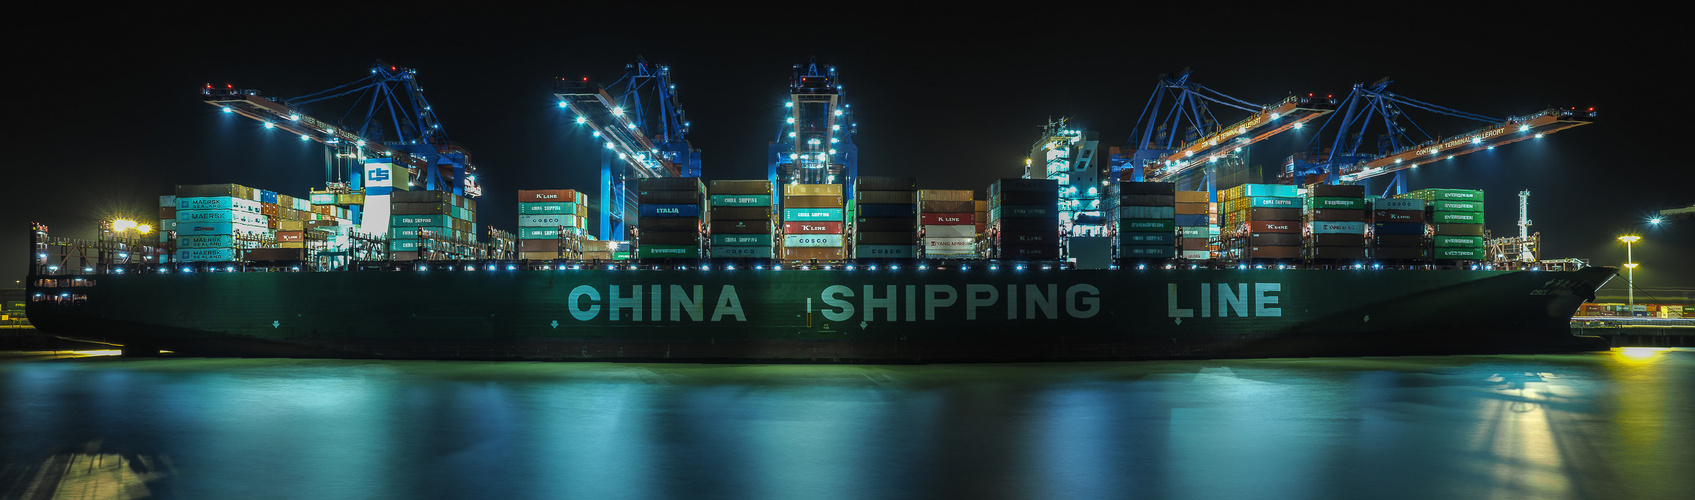 China Shipping Line  2